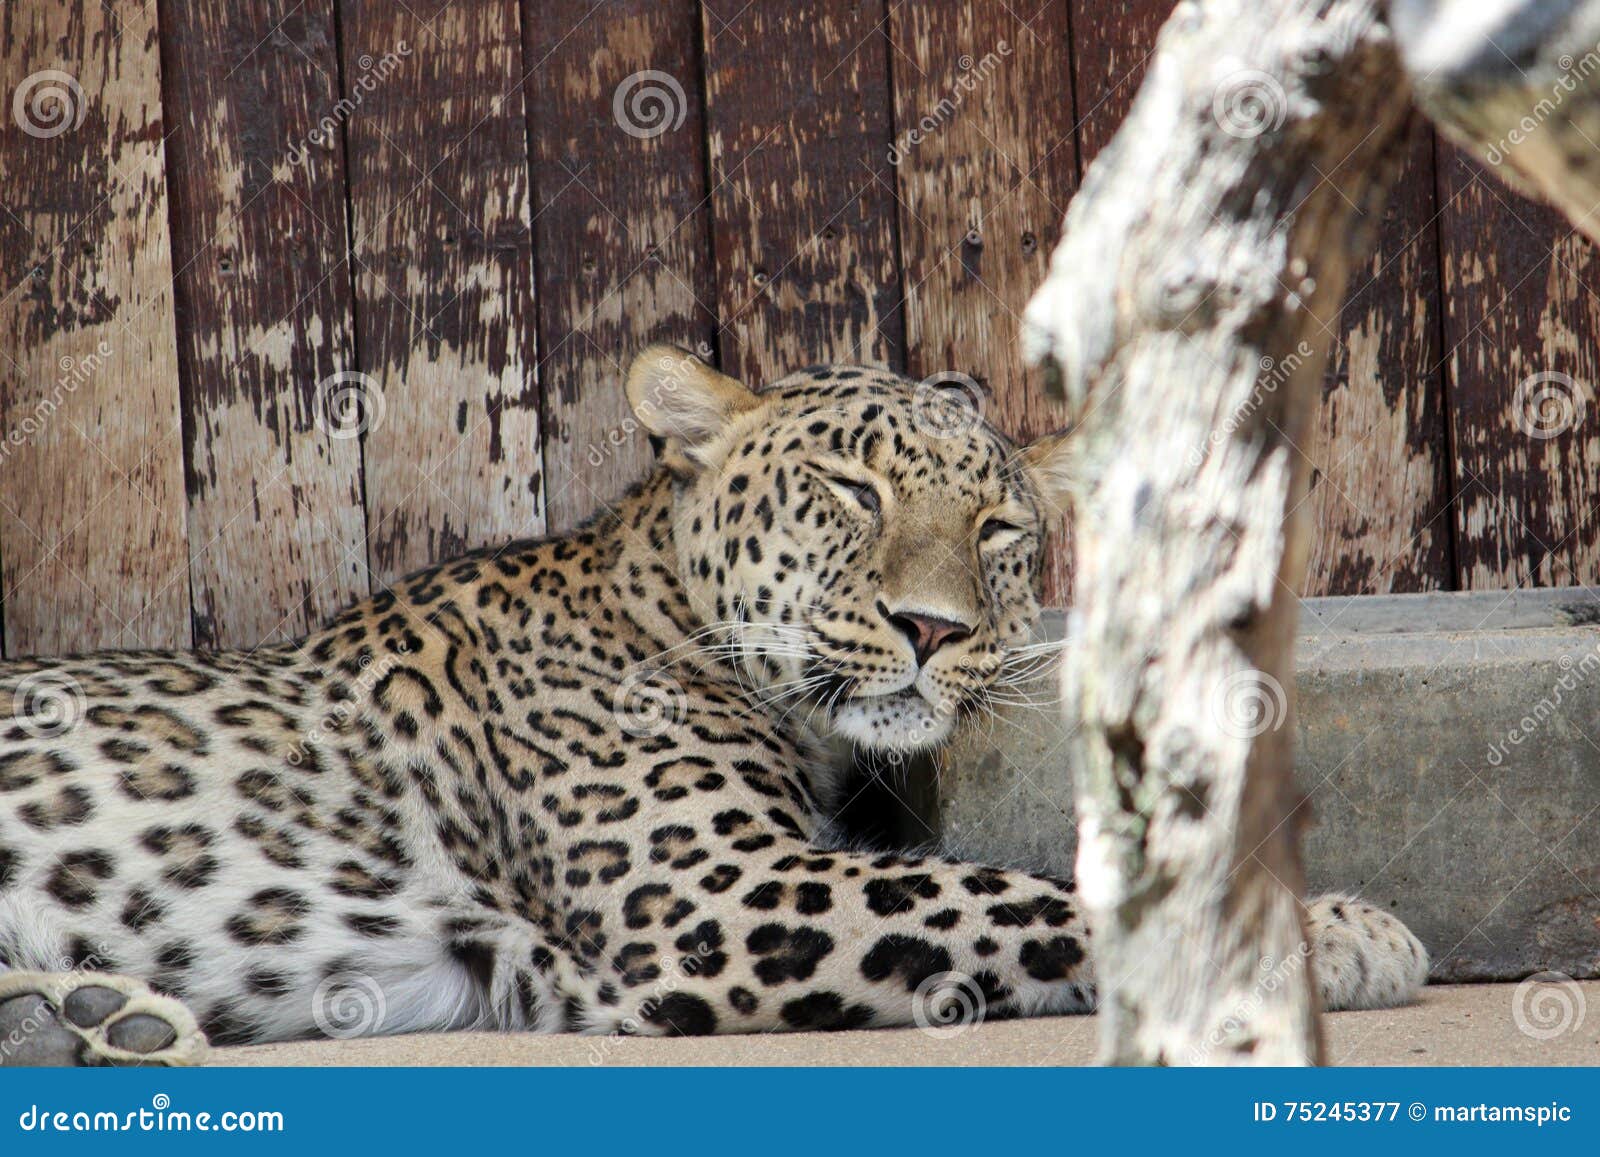 sleeping leopard